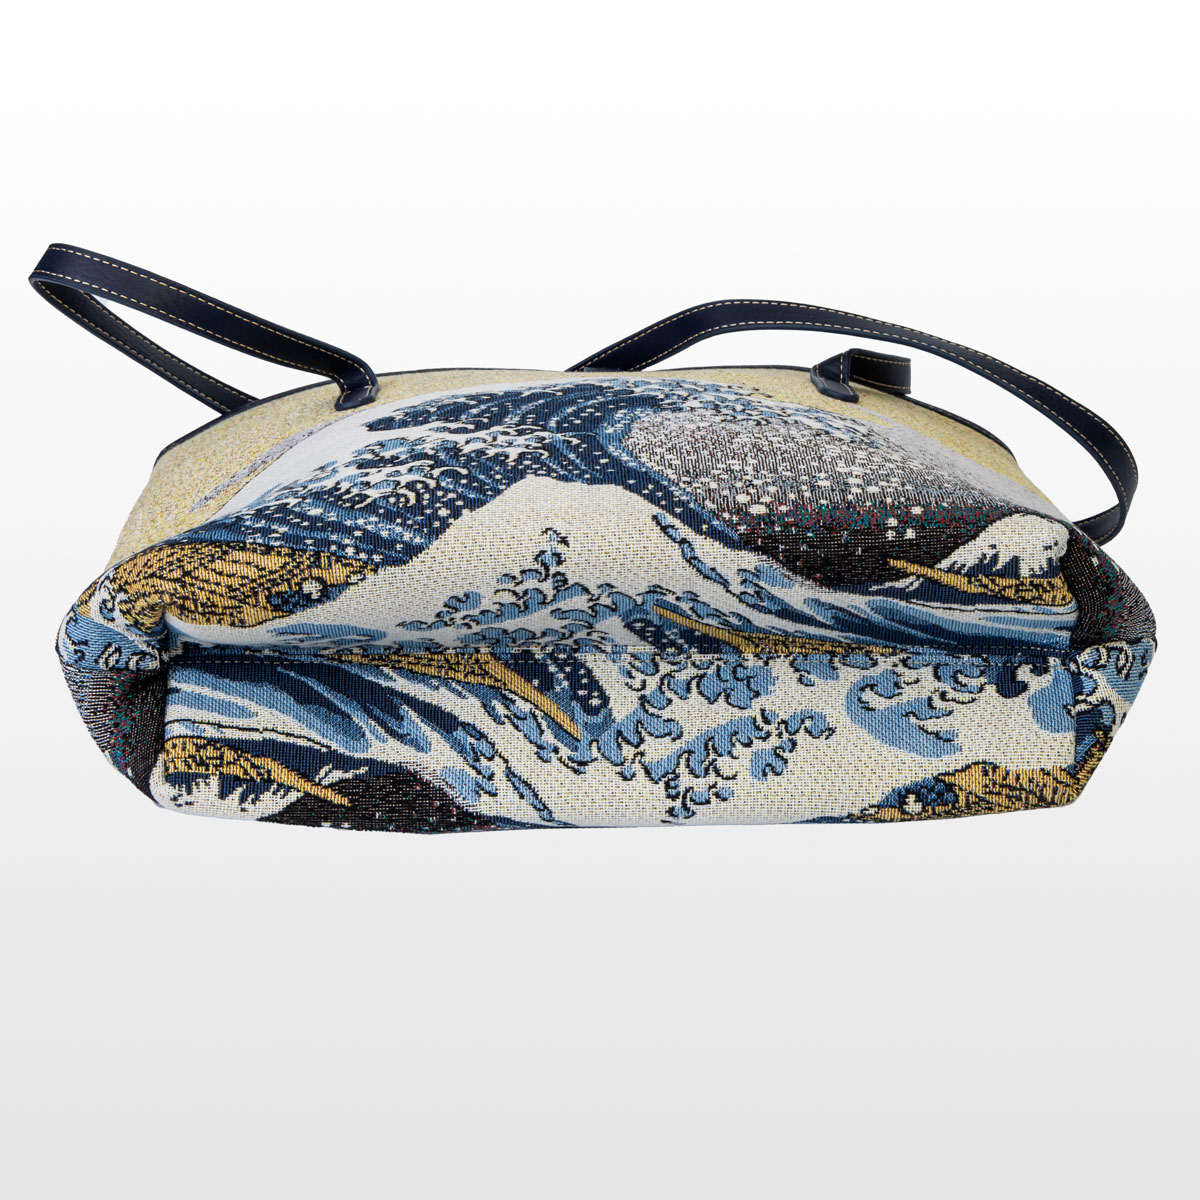 Hokusai handbag - The Great Wave of Kanagawa (detail n°3)